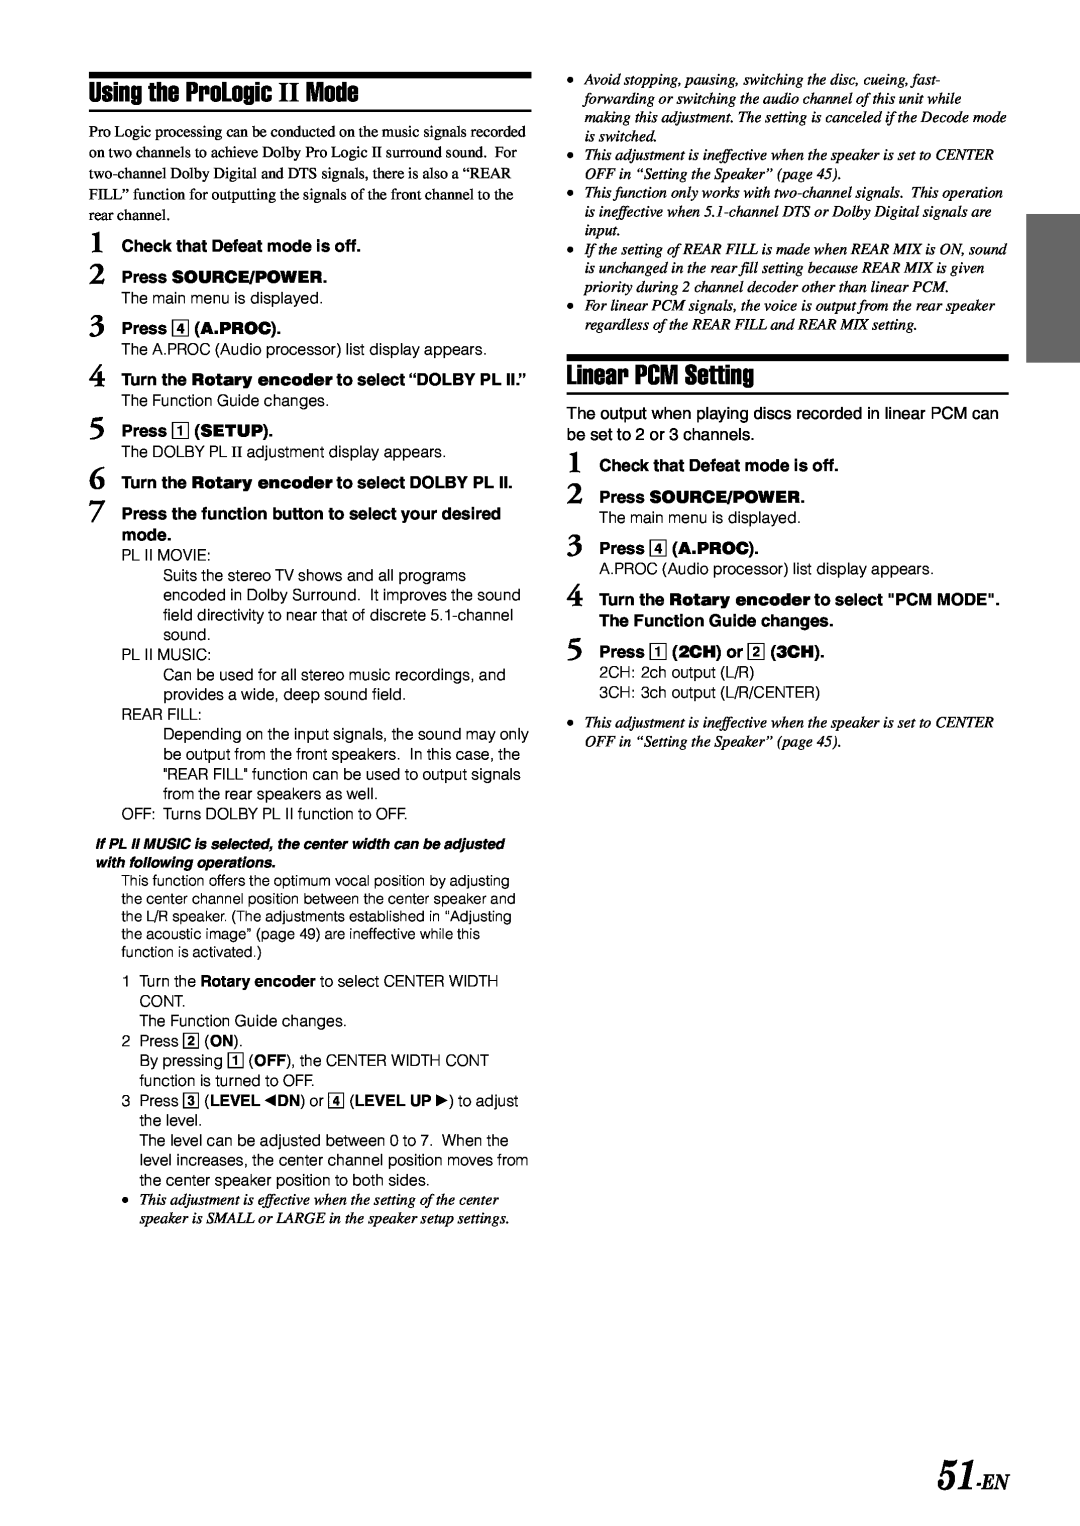 Alpine IVA-D900 owner manual Using the ProLogic II Mode, Linear PCM Setting, 51-EN 